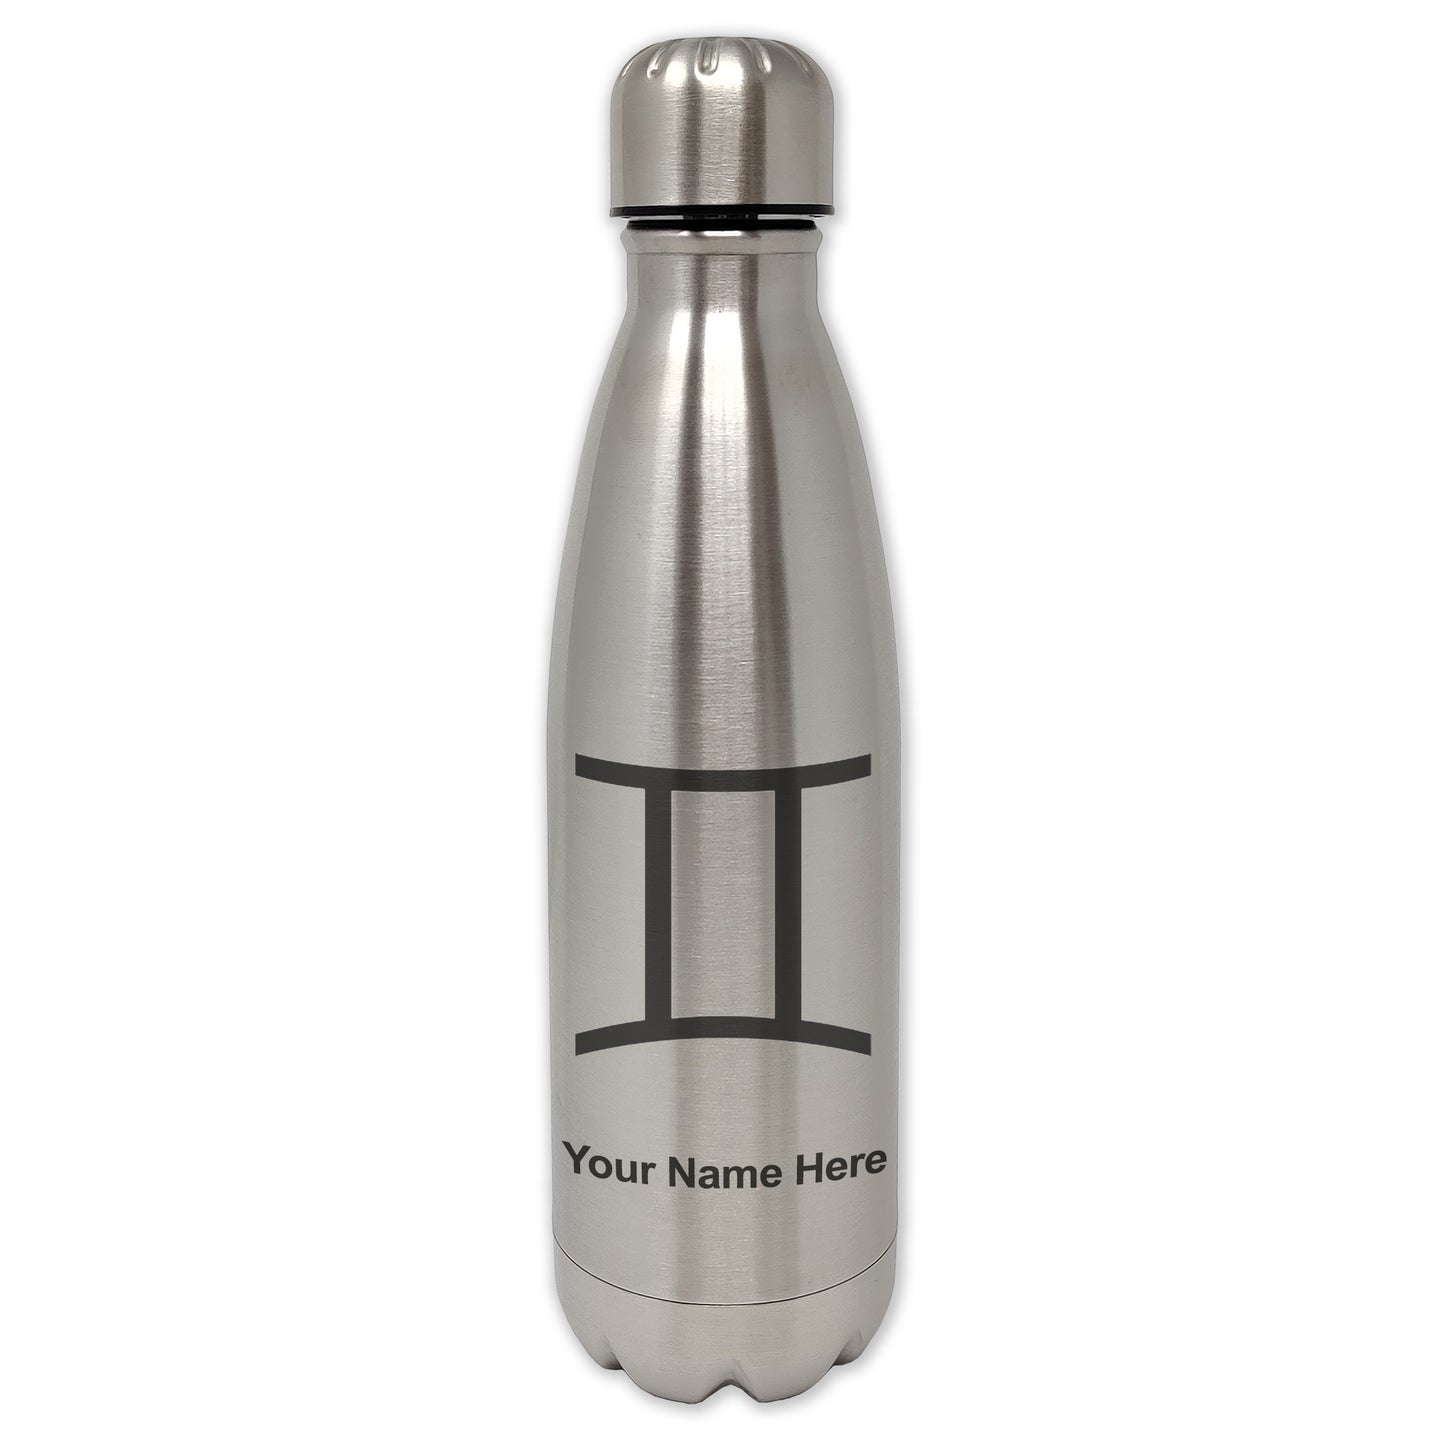 LaserGram Single Wall Water Bottle, Zodiac Sign Gemini, Personalized Engraving Included